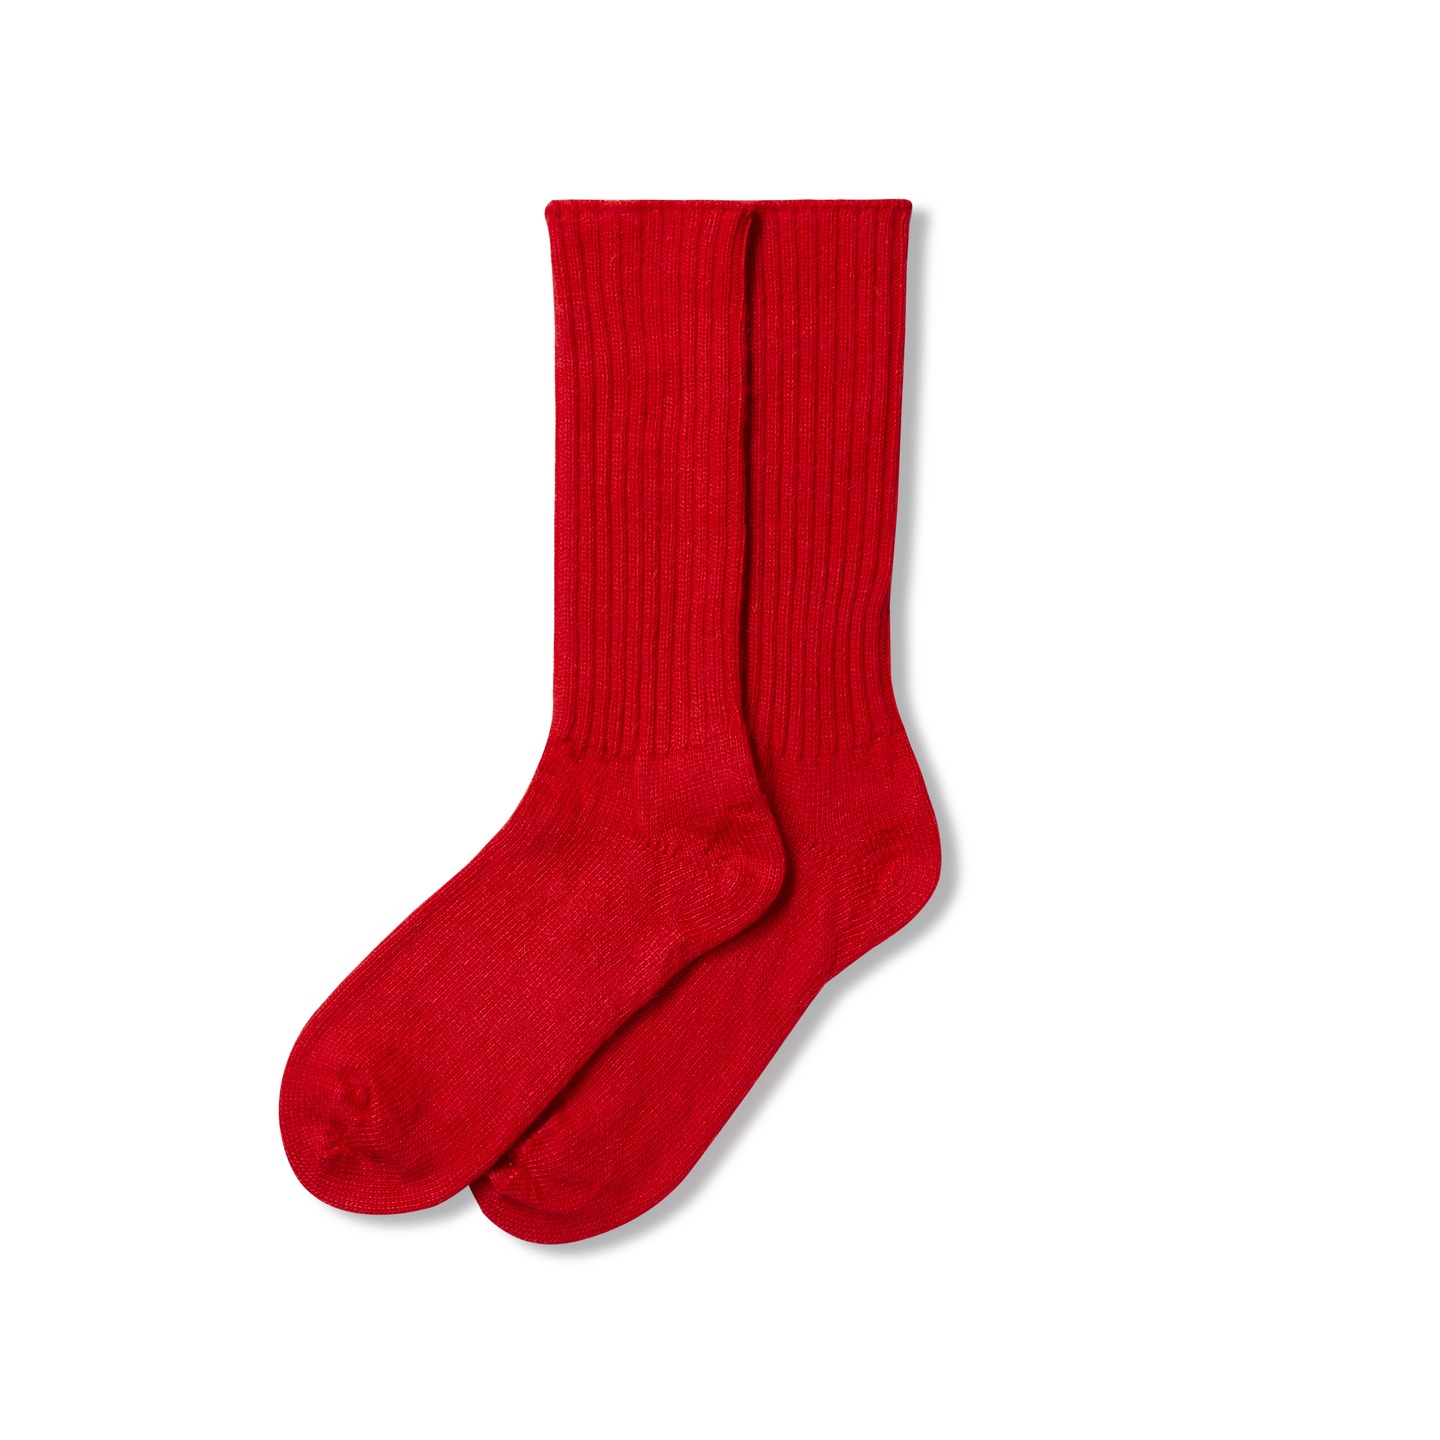 Bundle - The Alpaca/Mohair Soft-Top Sock Bundle